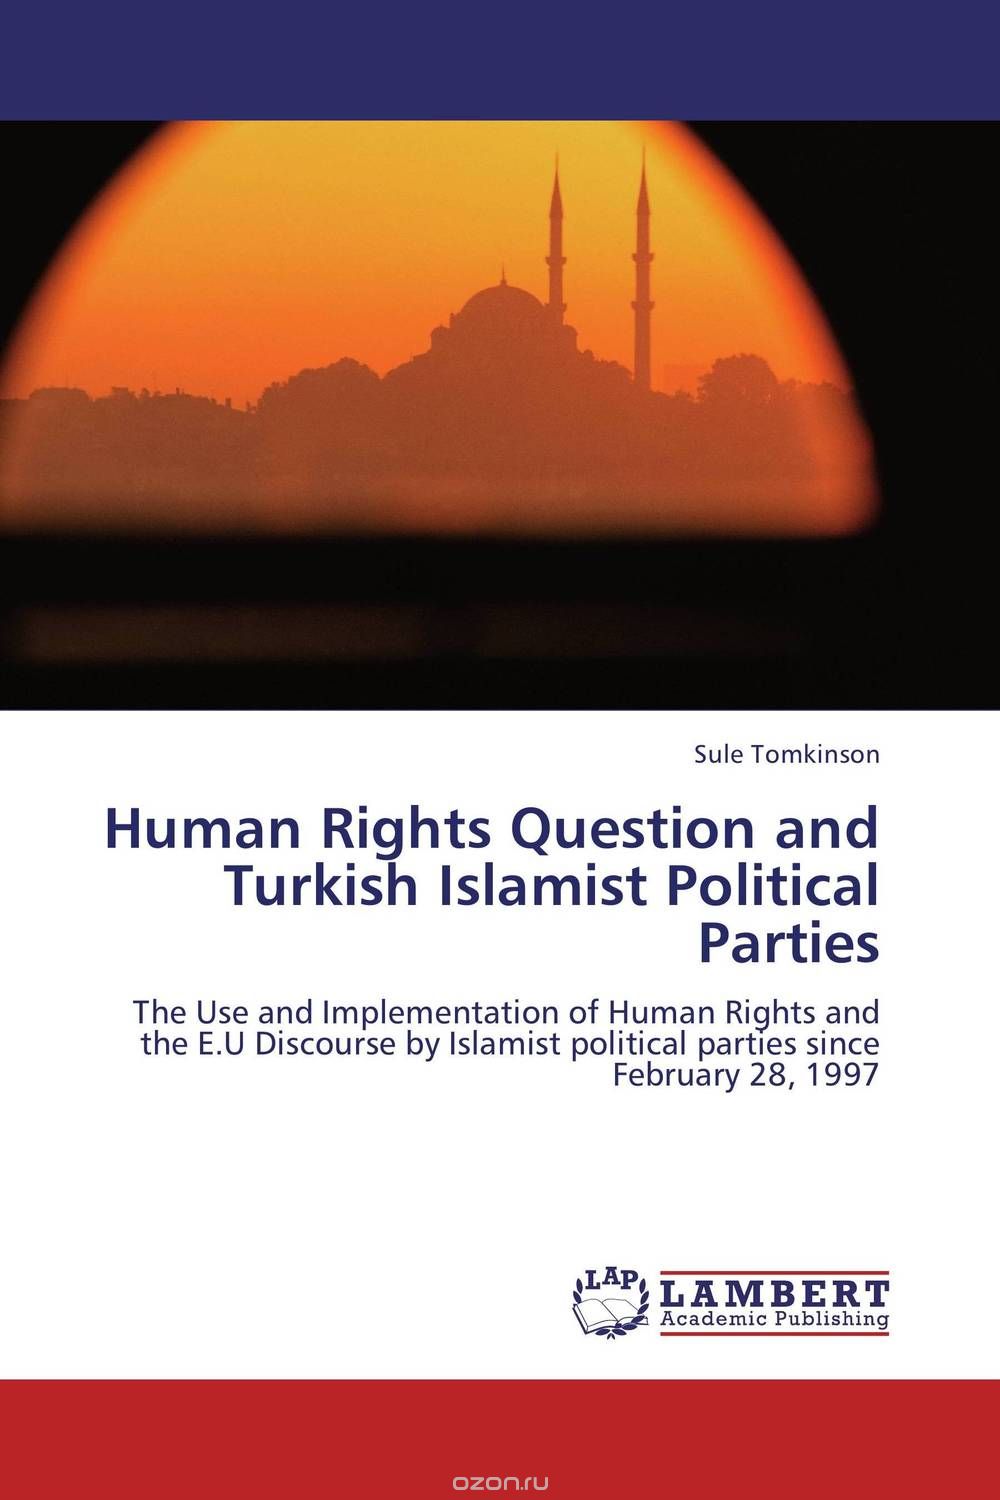 Скачать книгу "Human Rights Question and Turkish Islamist Political Parties"